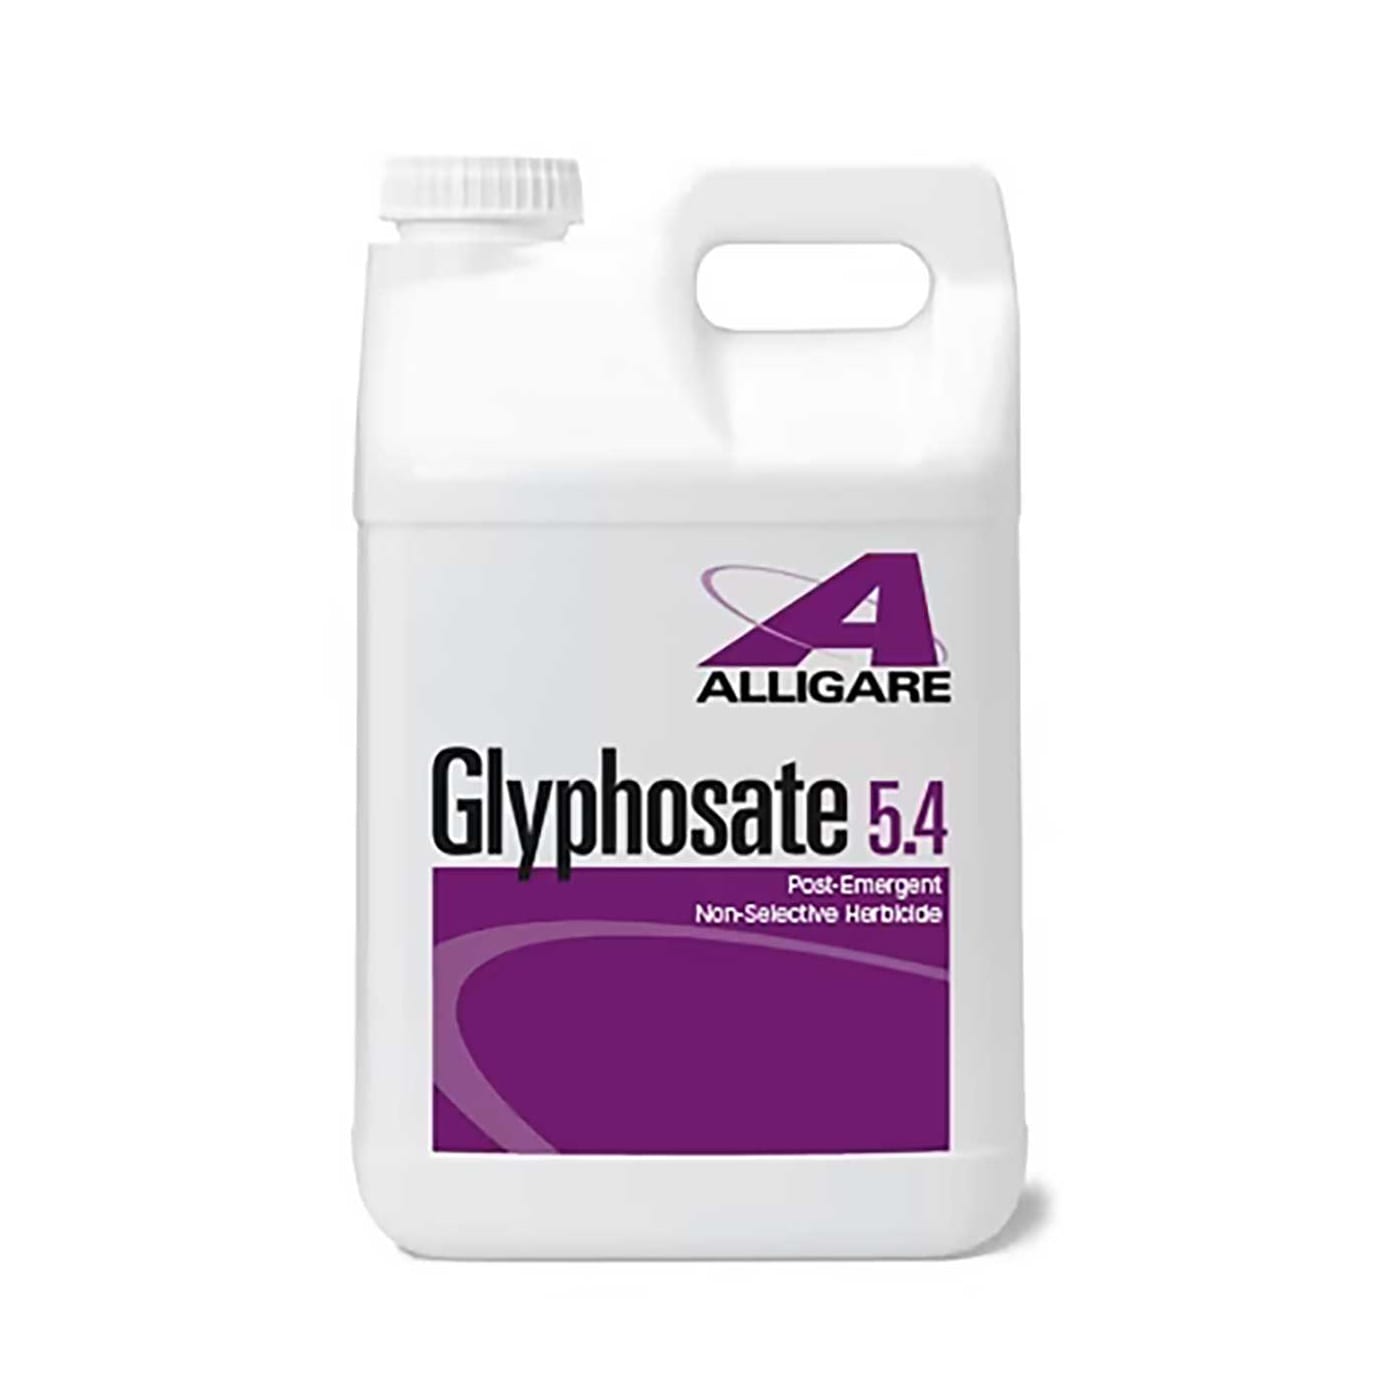 Alligare Glyphosate 5.4